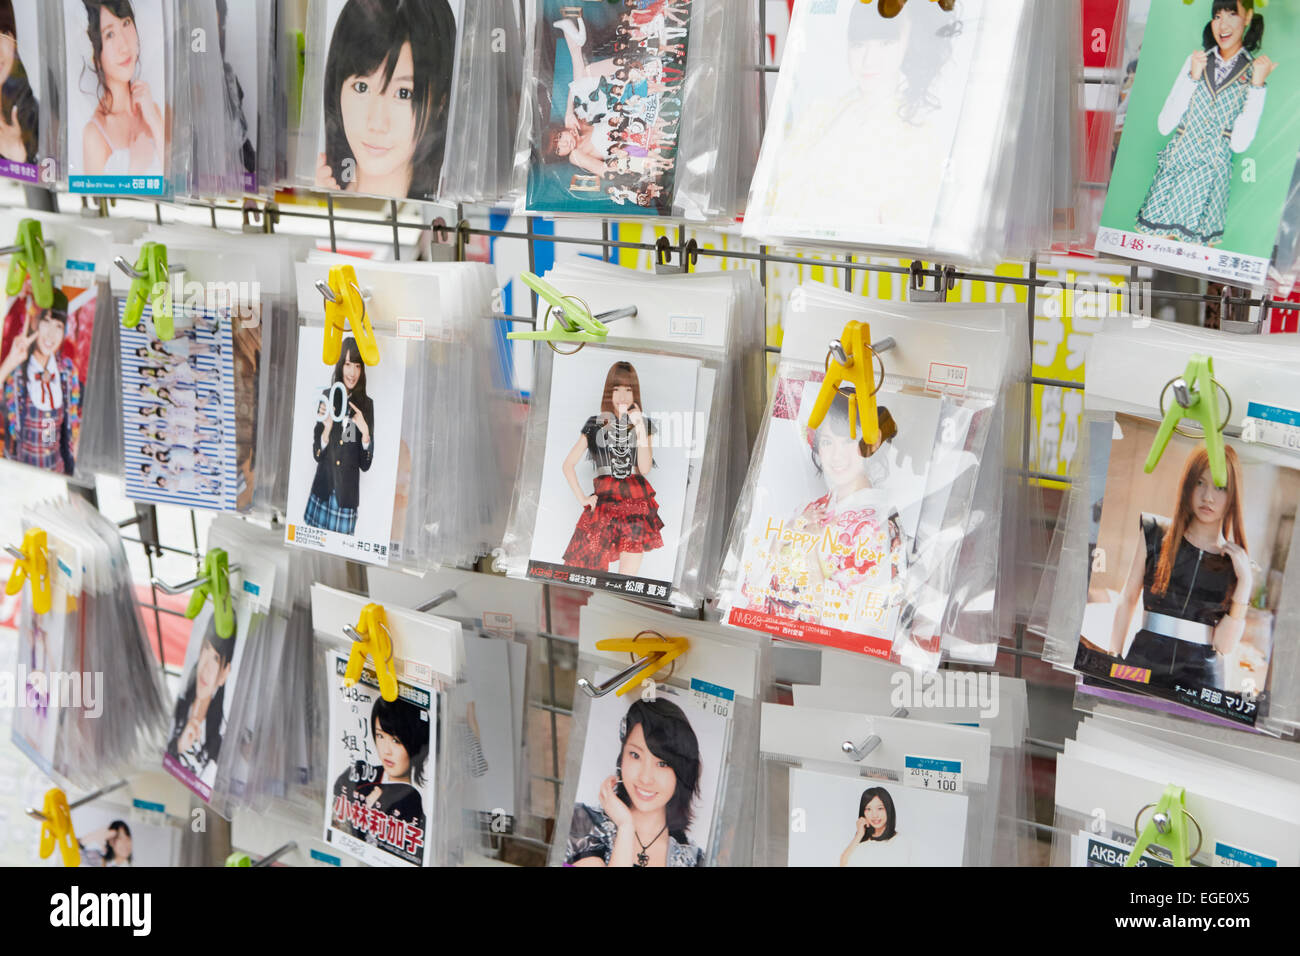 Model photographs on sale, Akiharbara, Tokyo, Japan Stock Photo